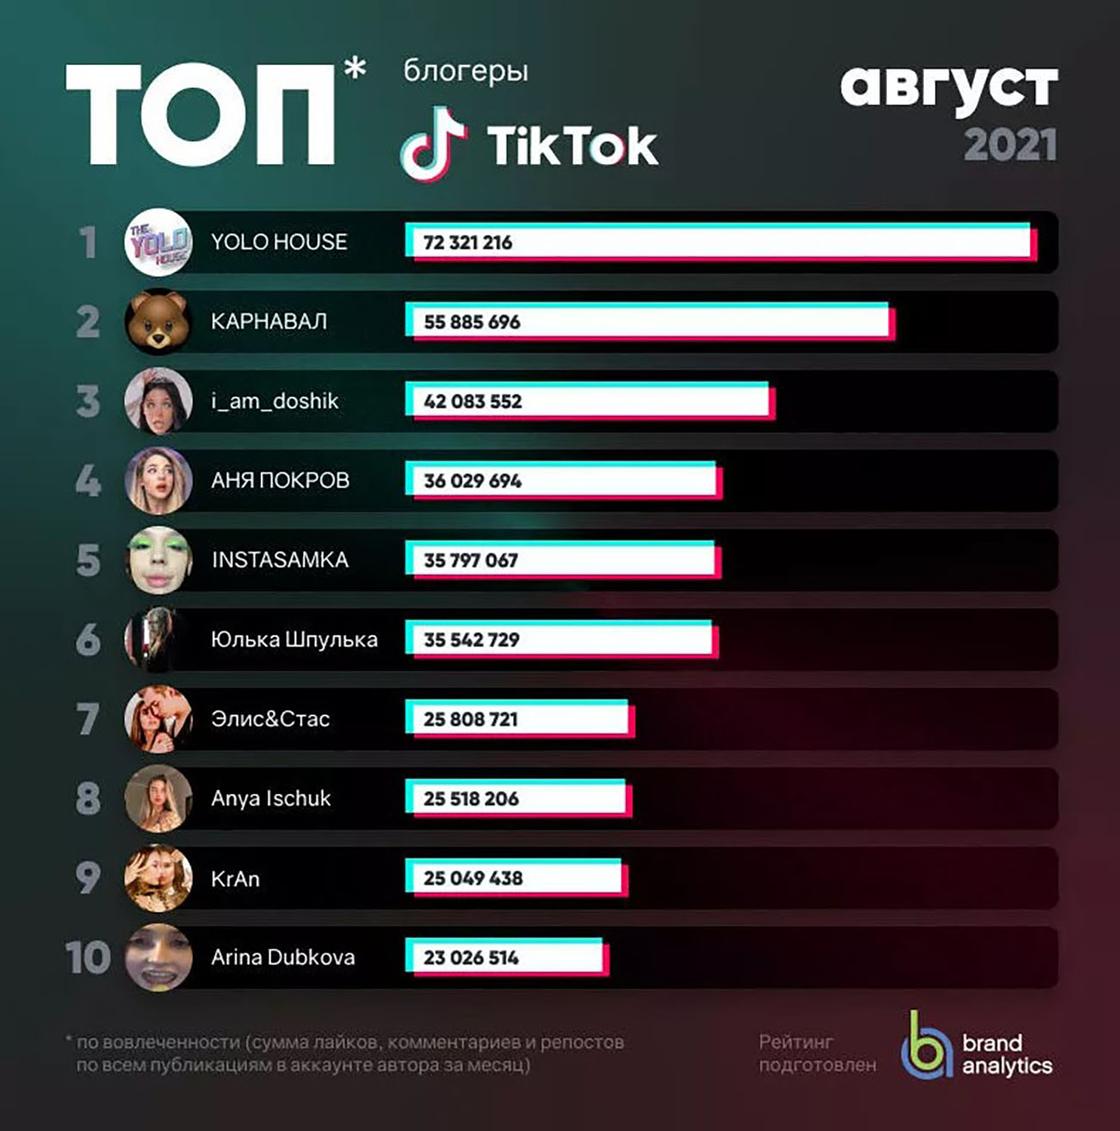 Топ русскоязычных Tik-Tok блогеров за август 2021 года